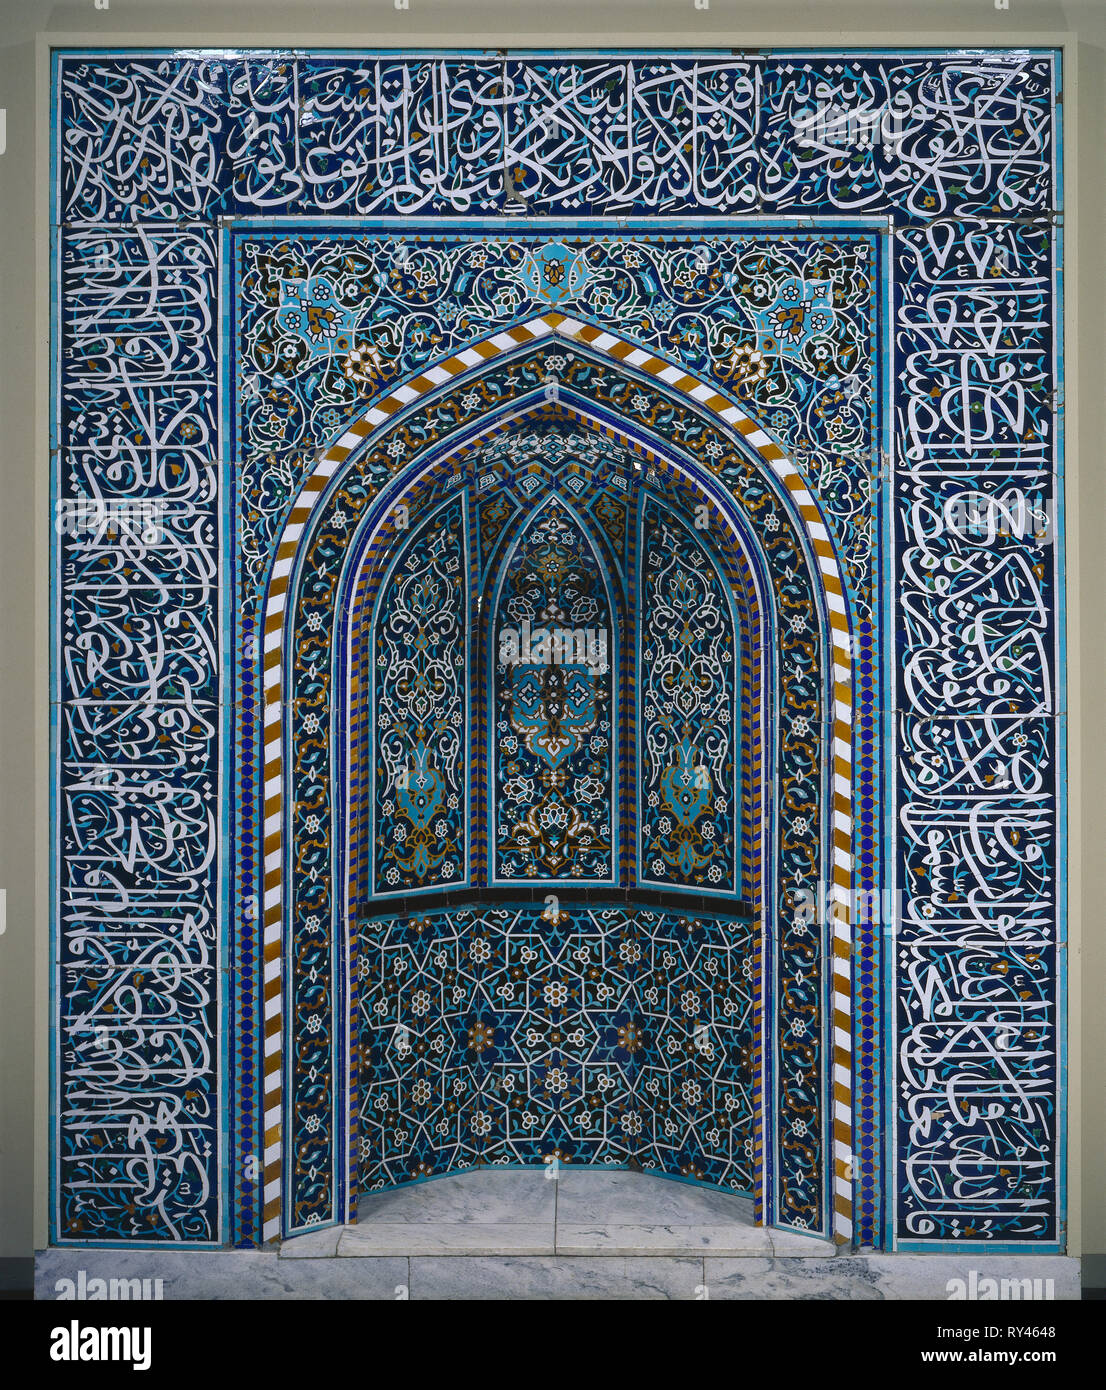 Prayer Niche (Mihrab), early 1600s. Iran, Isfahan. Ceramic mosaic; mihrab: 290.7 x 245.3 cm (114 7/16 x 96 9/16 in.); frieze: 69.2 x 1563.5 cm (27 1/4 x 615 9/16 in Stock Photo